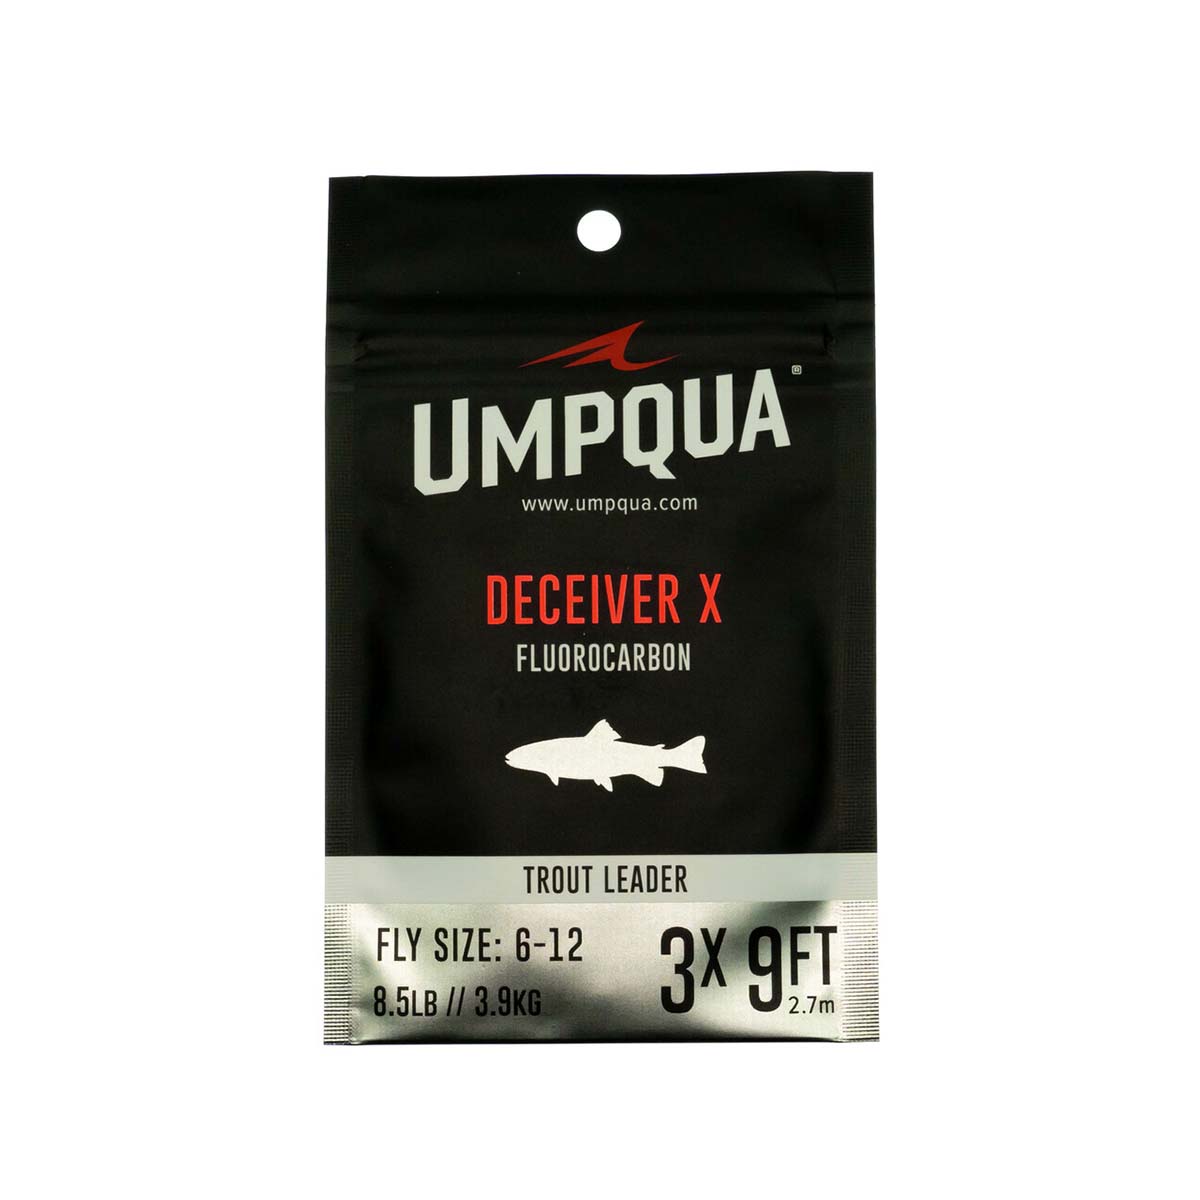 Umpqua Deceiver X Fluorocarbon Leader